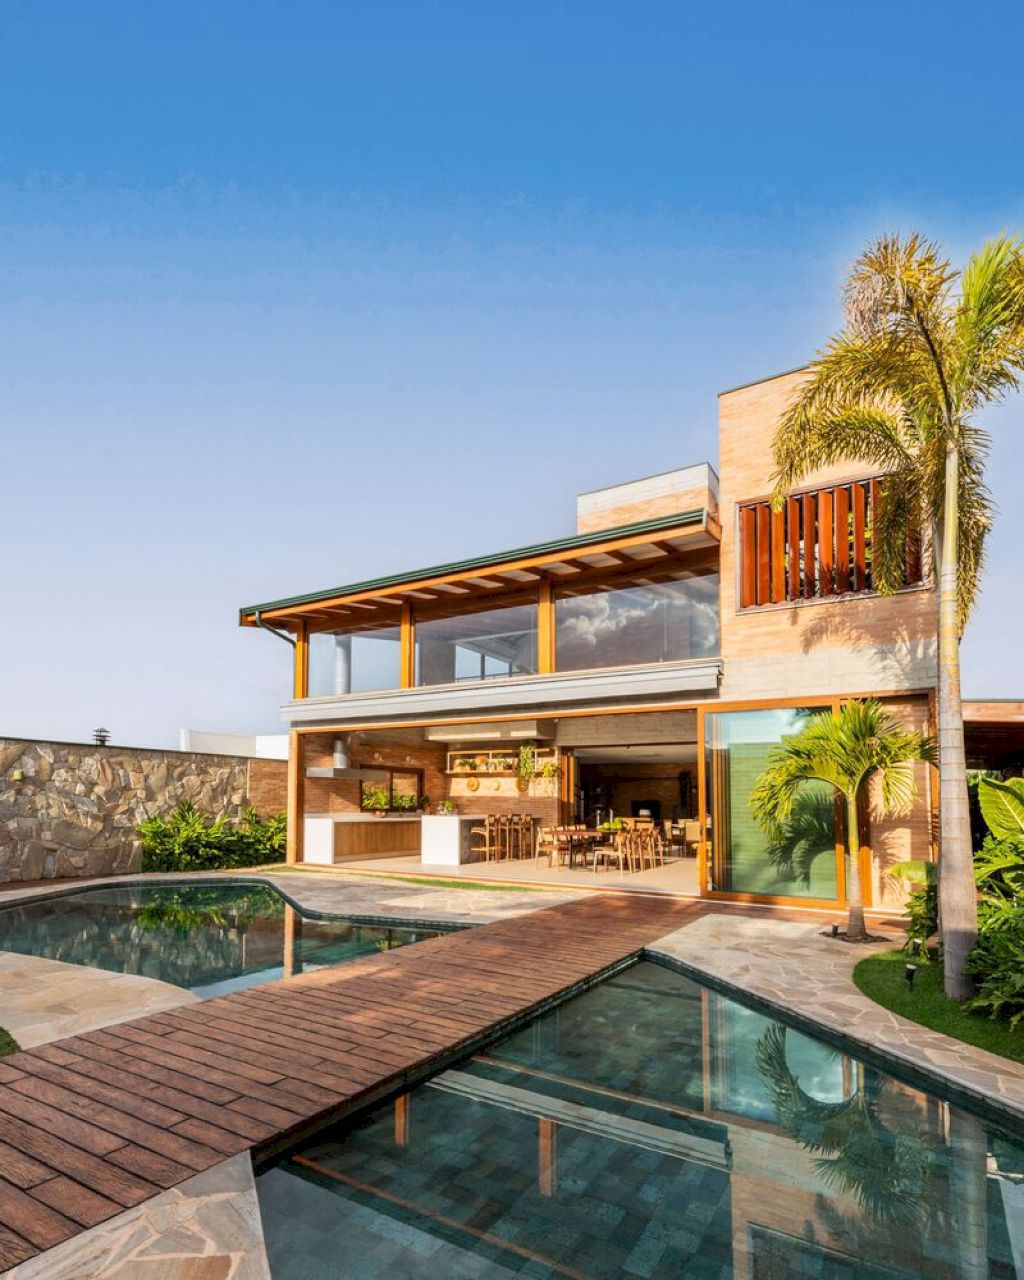 Lima House, A Coastal Oasis by Pietro Terlizzi Arquitetura